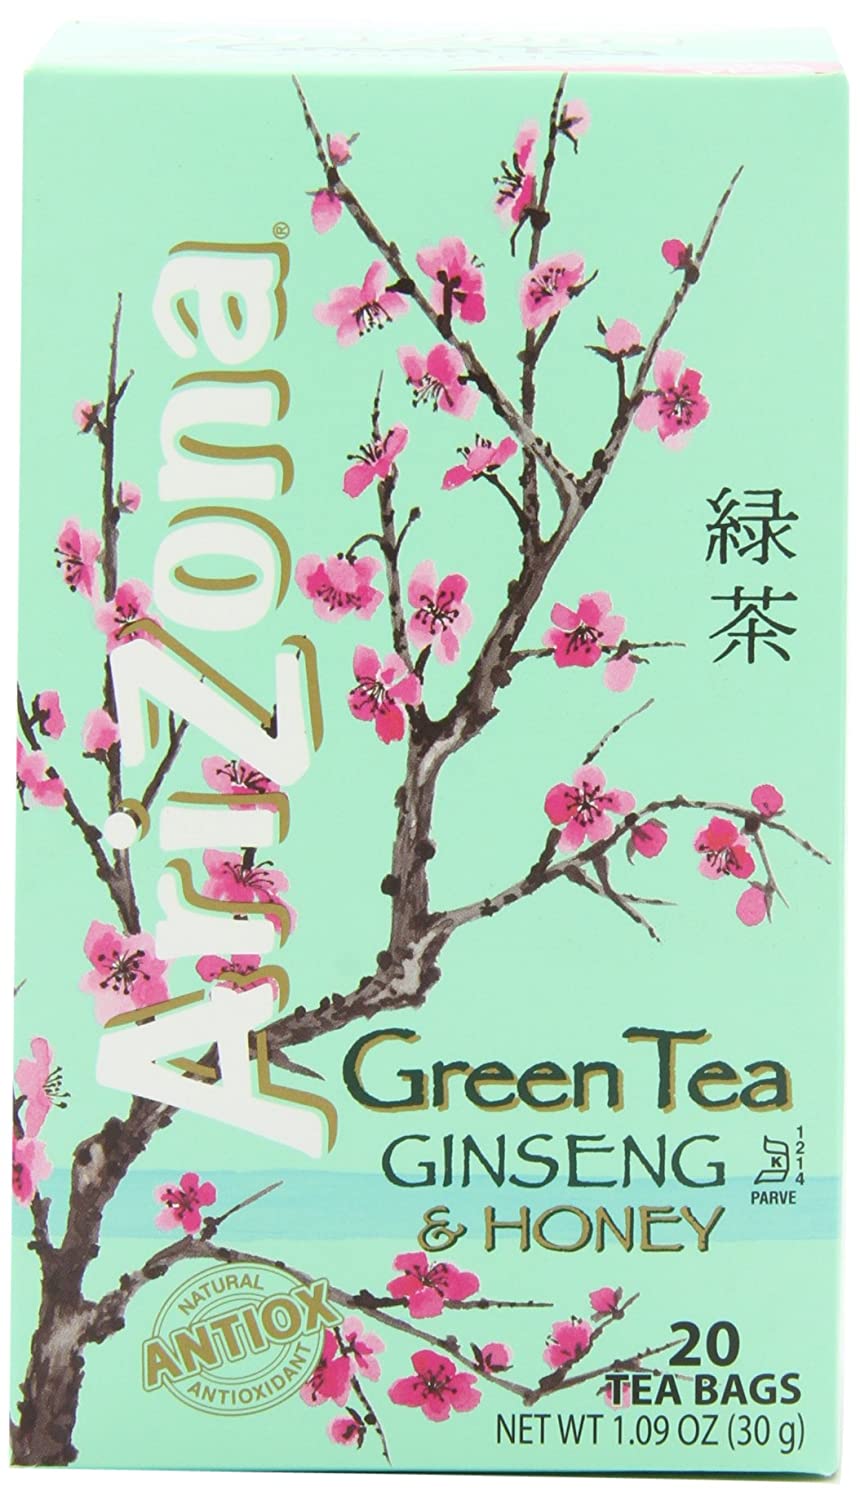 Amazon.com, AriZona Green Tea with Ginseng & Honey, 20 Count Tea